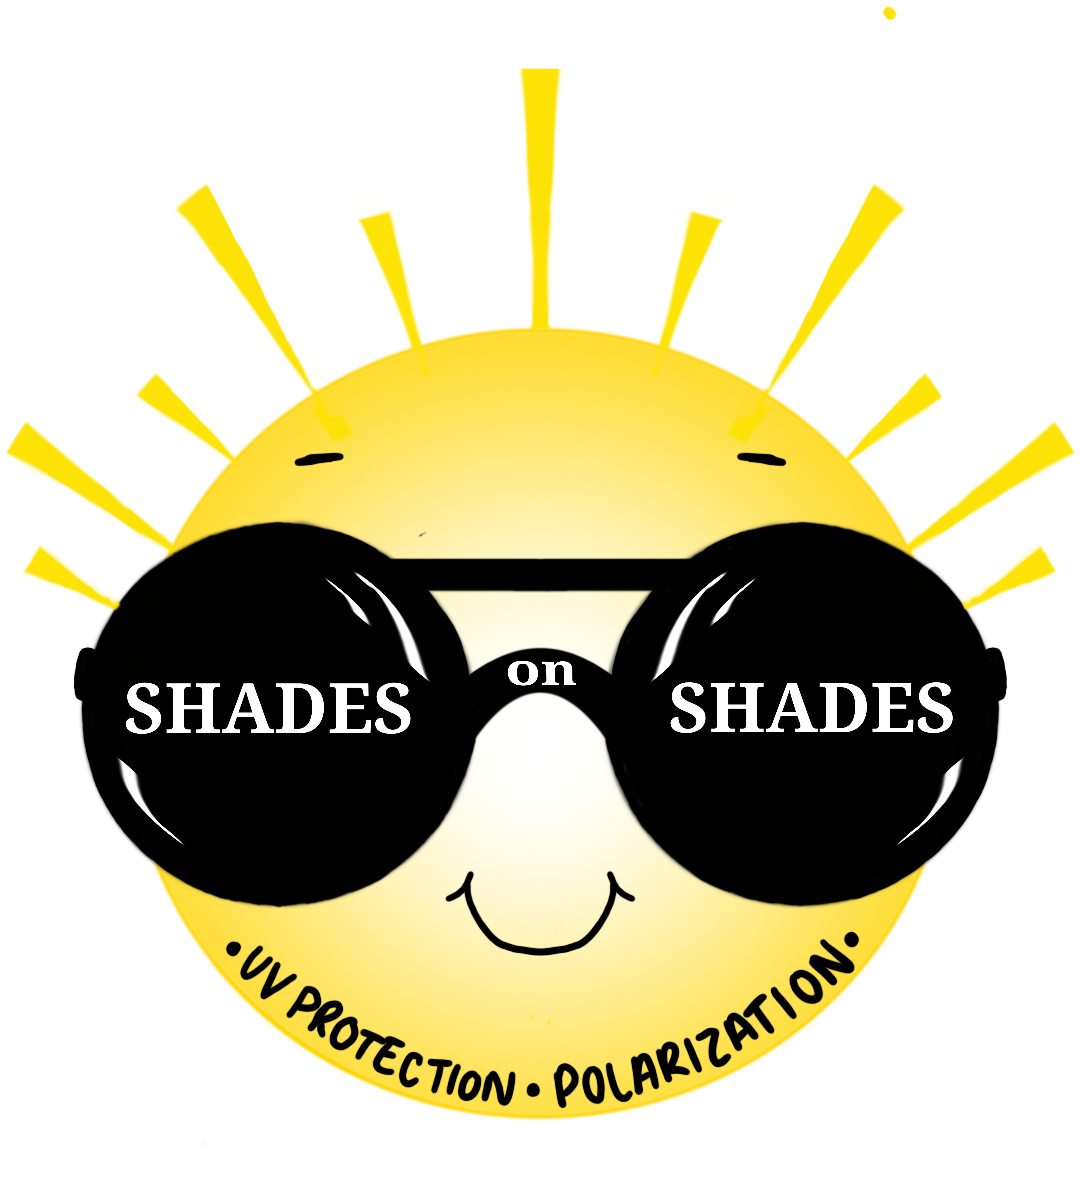 Shades logo